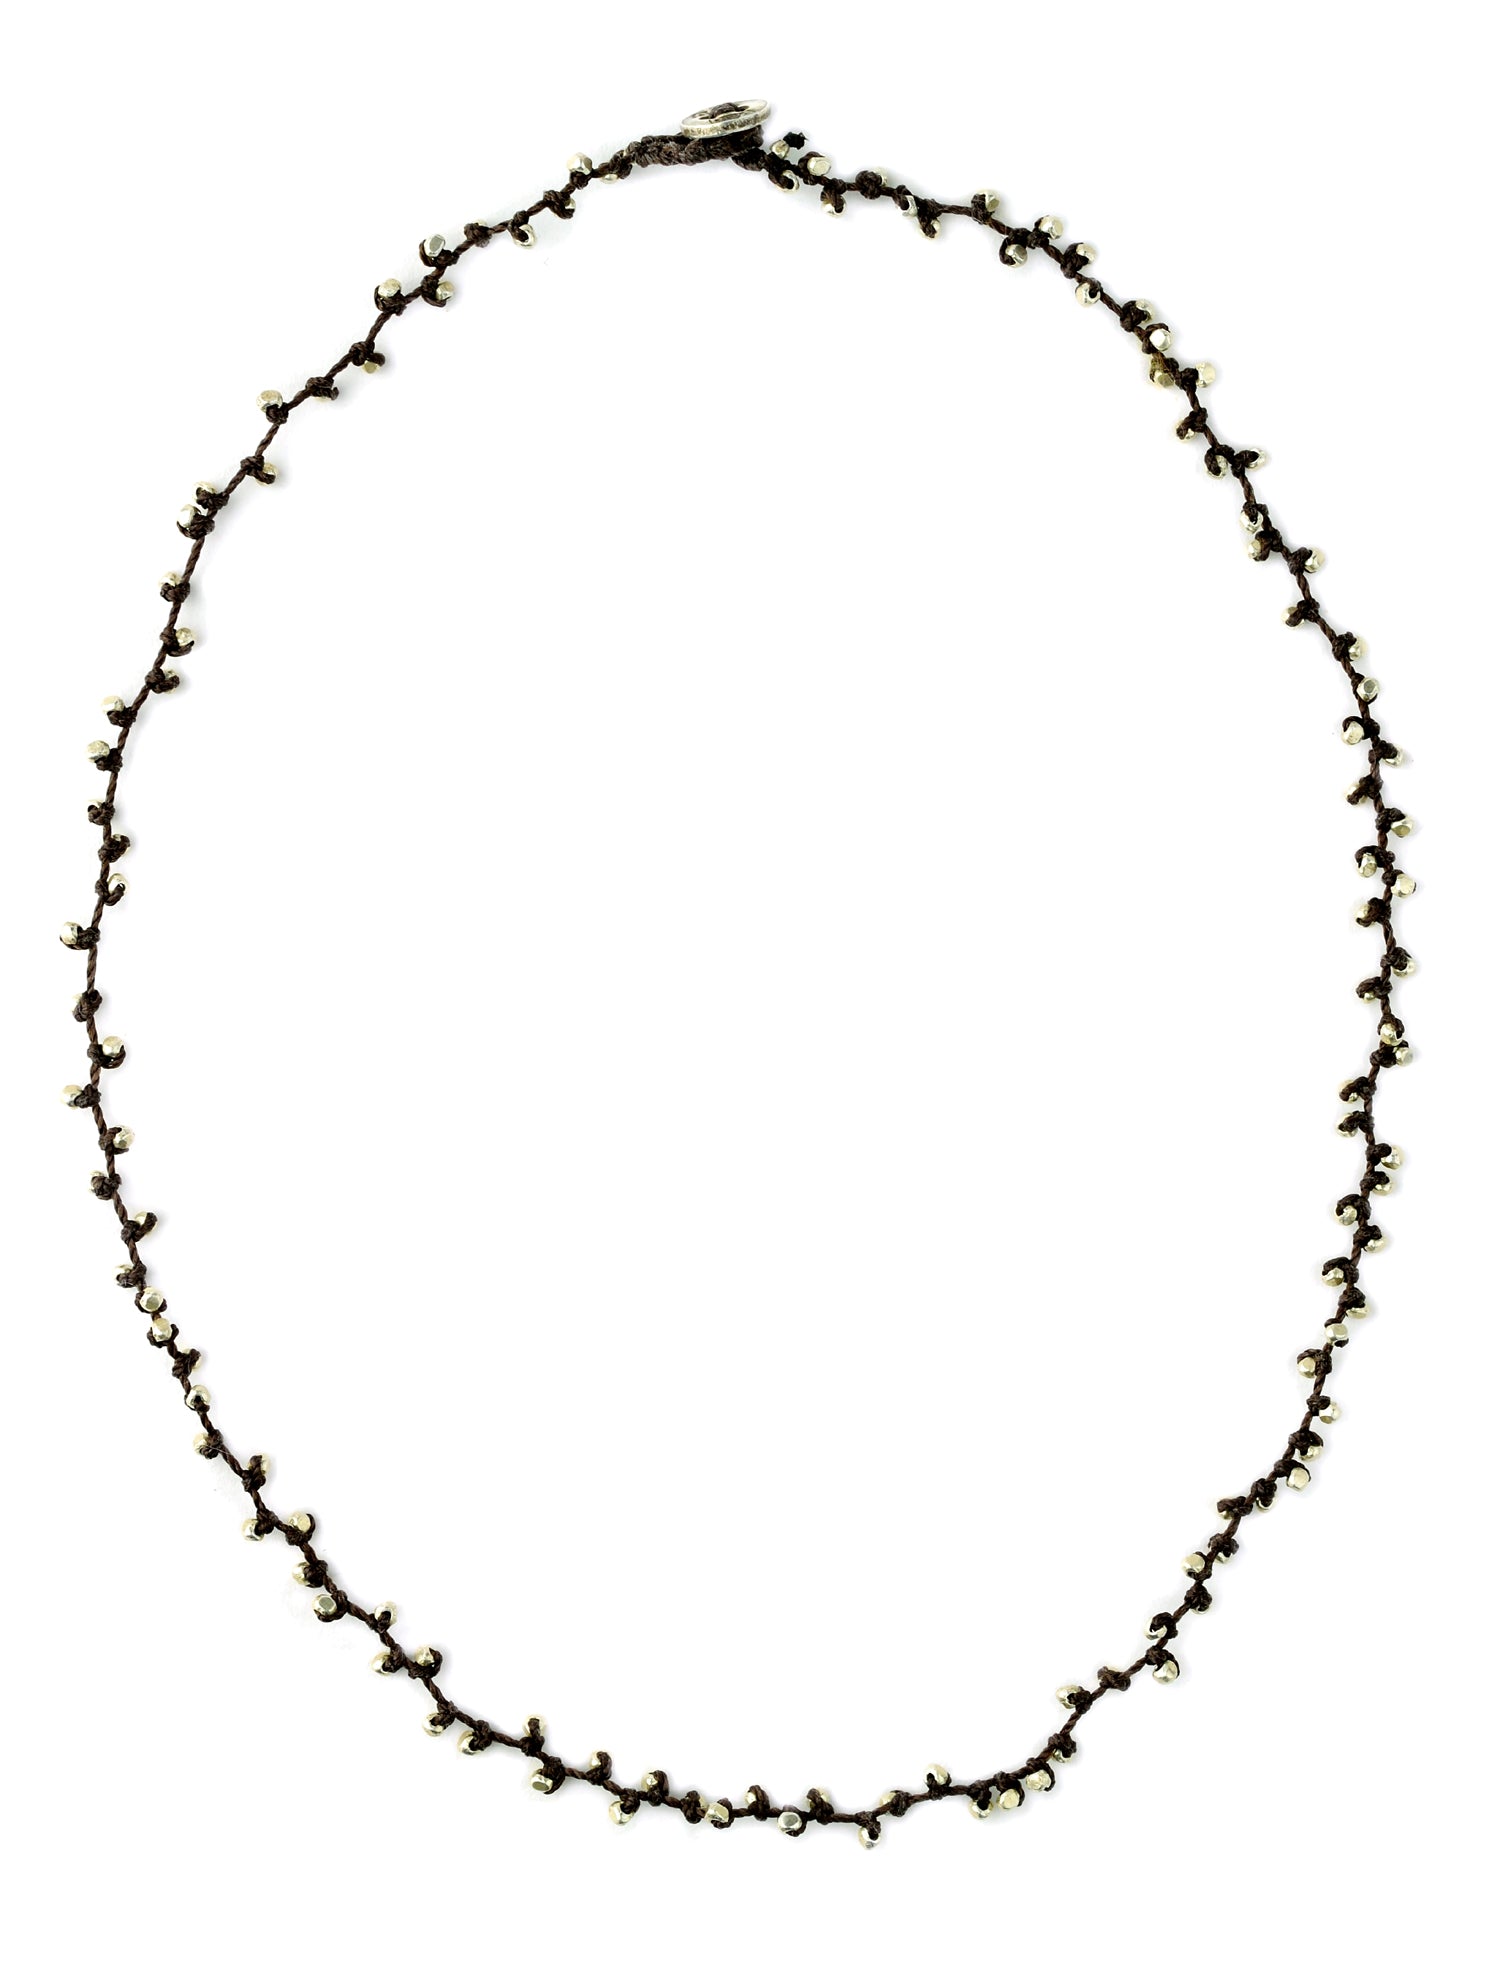 onujewelry,com - Sterling Silver Love Knot necklace hand-knotted by Donna Silvestri, On U Jewelry, RIchmond, VA